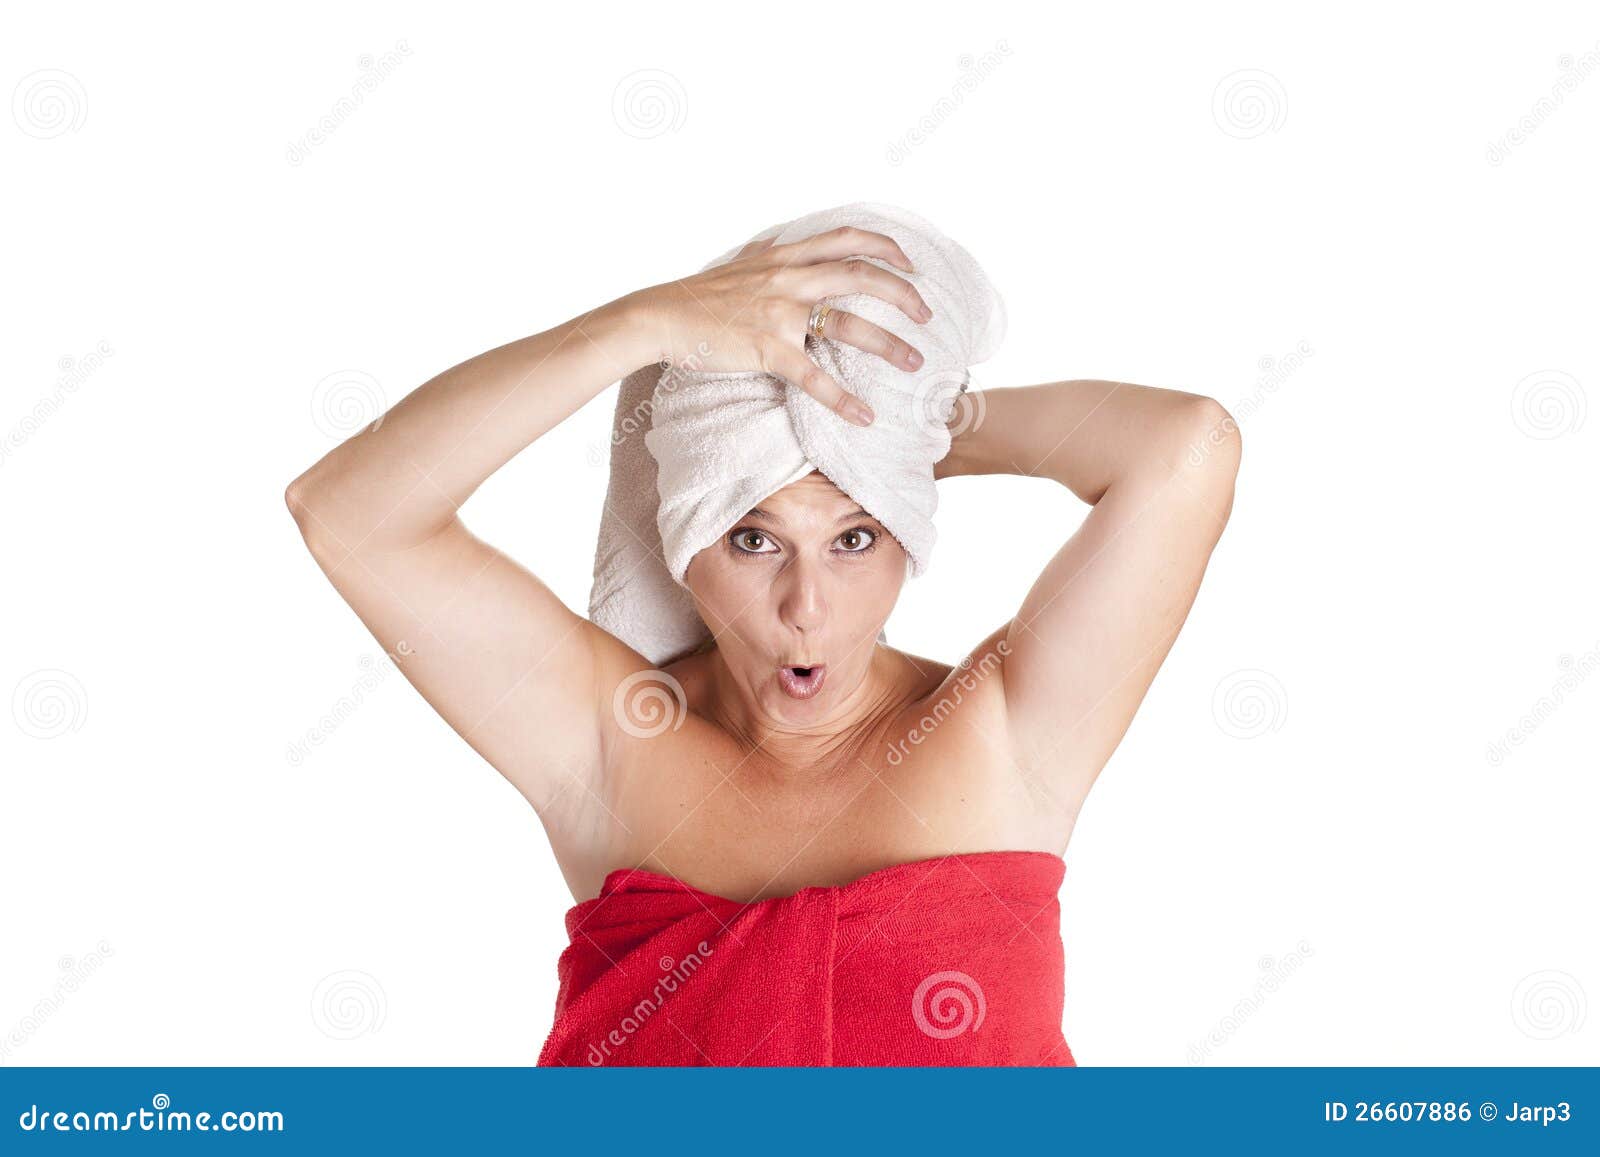 Полотенце на лоб. Девушка с полотенцем на голове. Мужчина с полотенцем на голове. Правка головы полотенцем. Накрыть голову полотенцем.